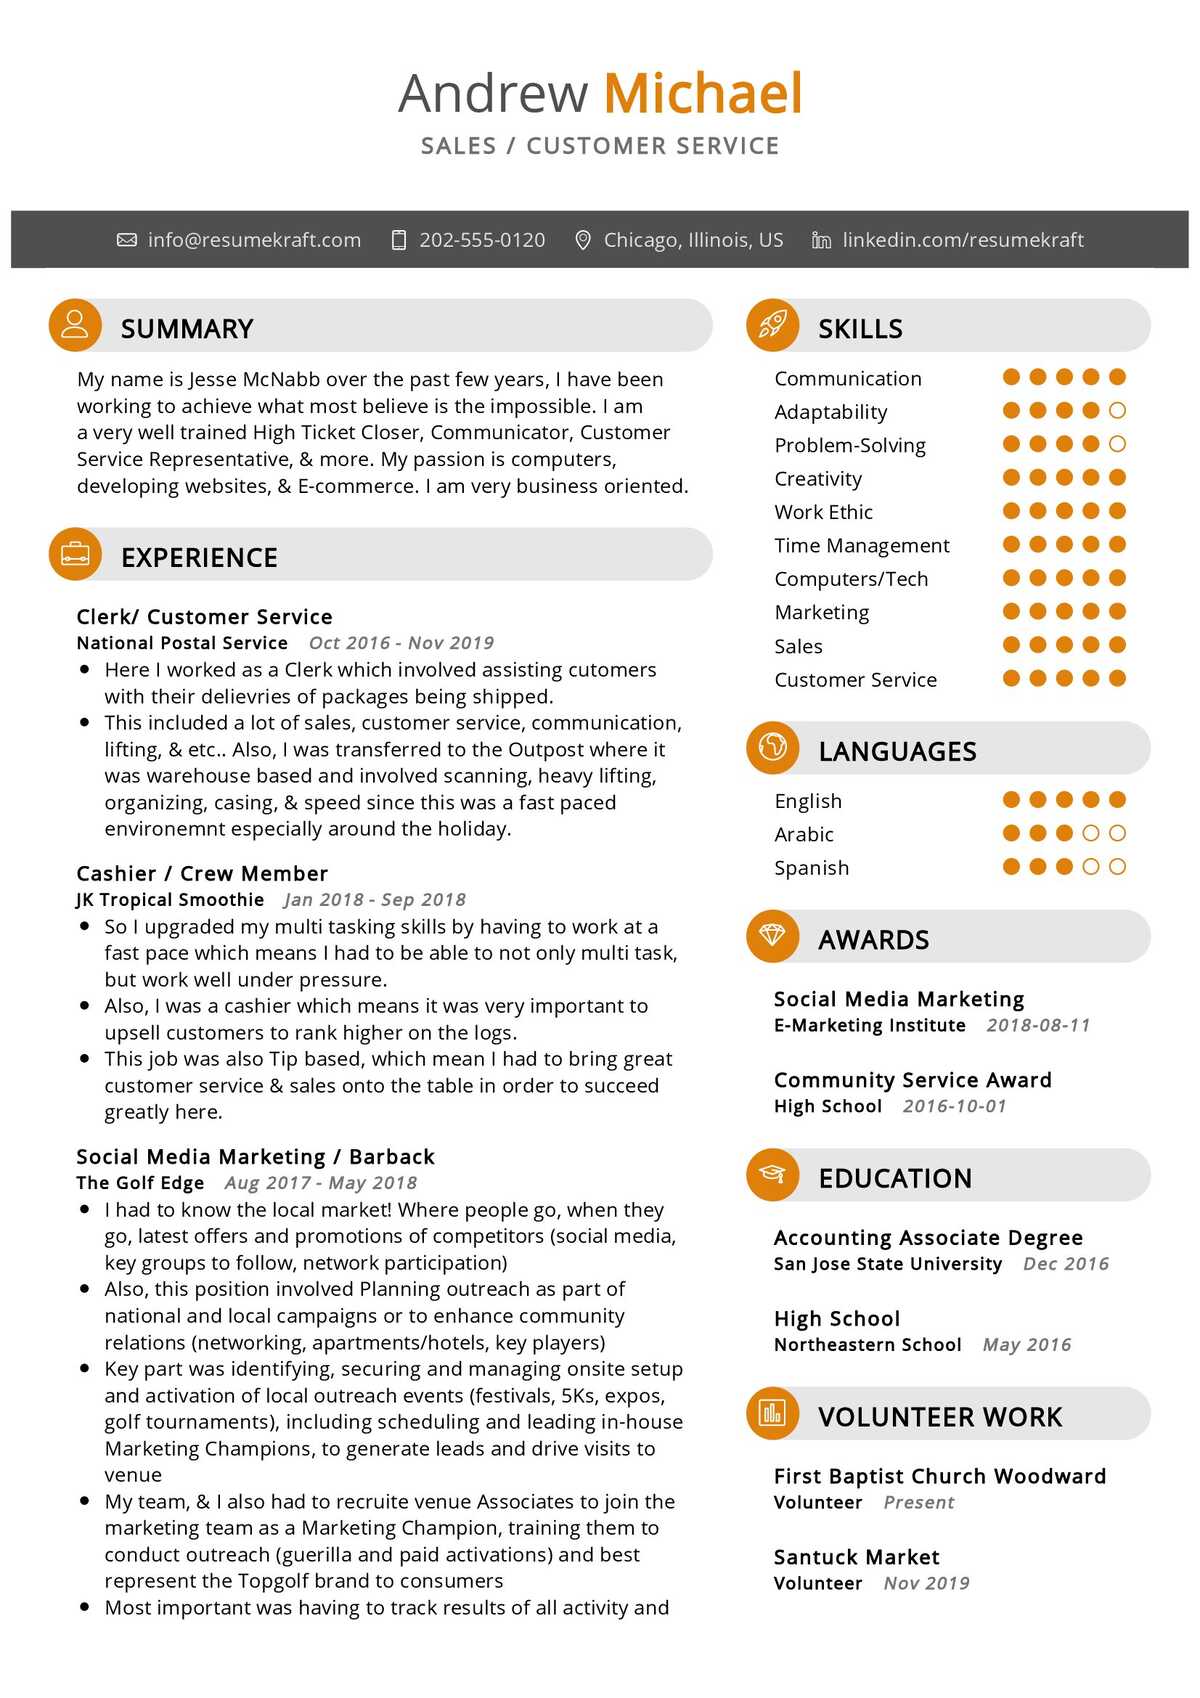 Customer Service CV Example 